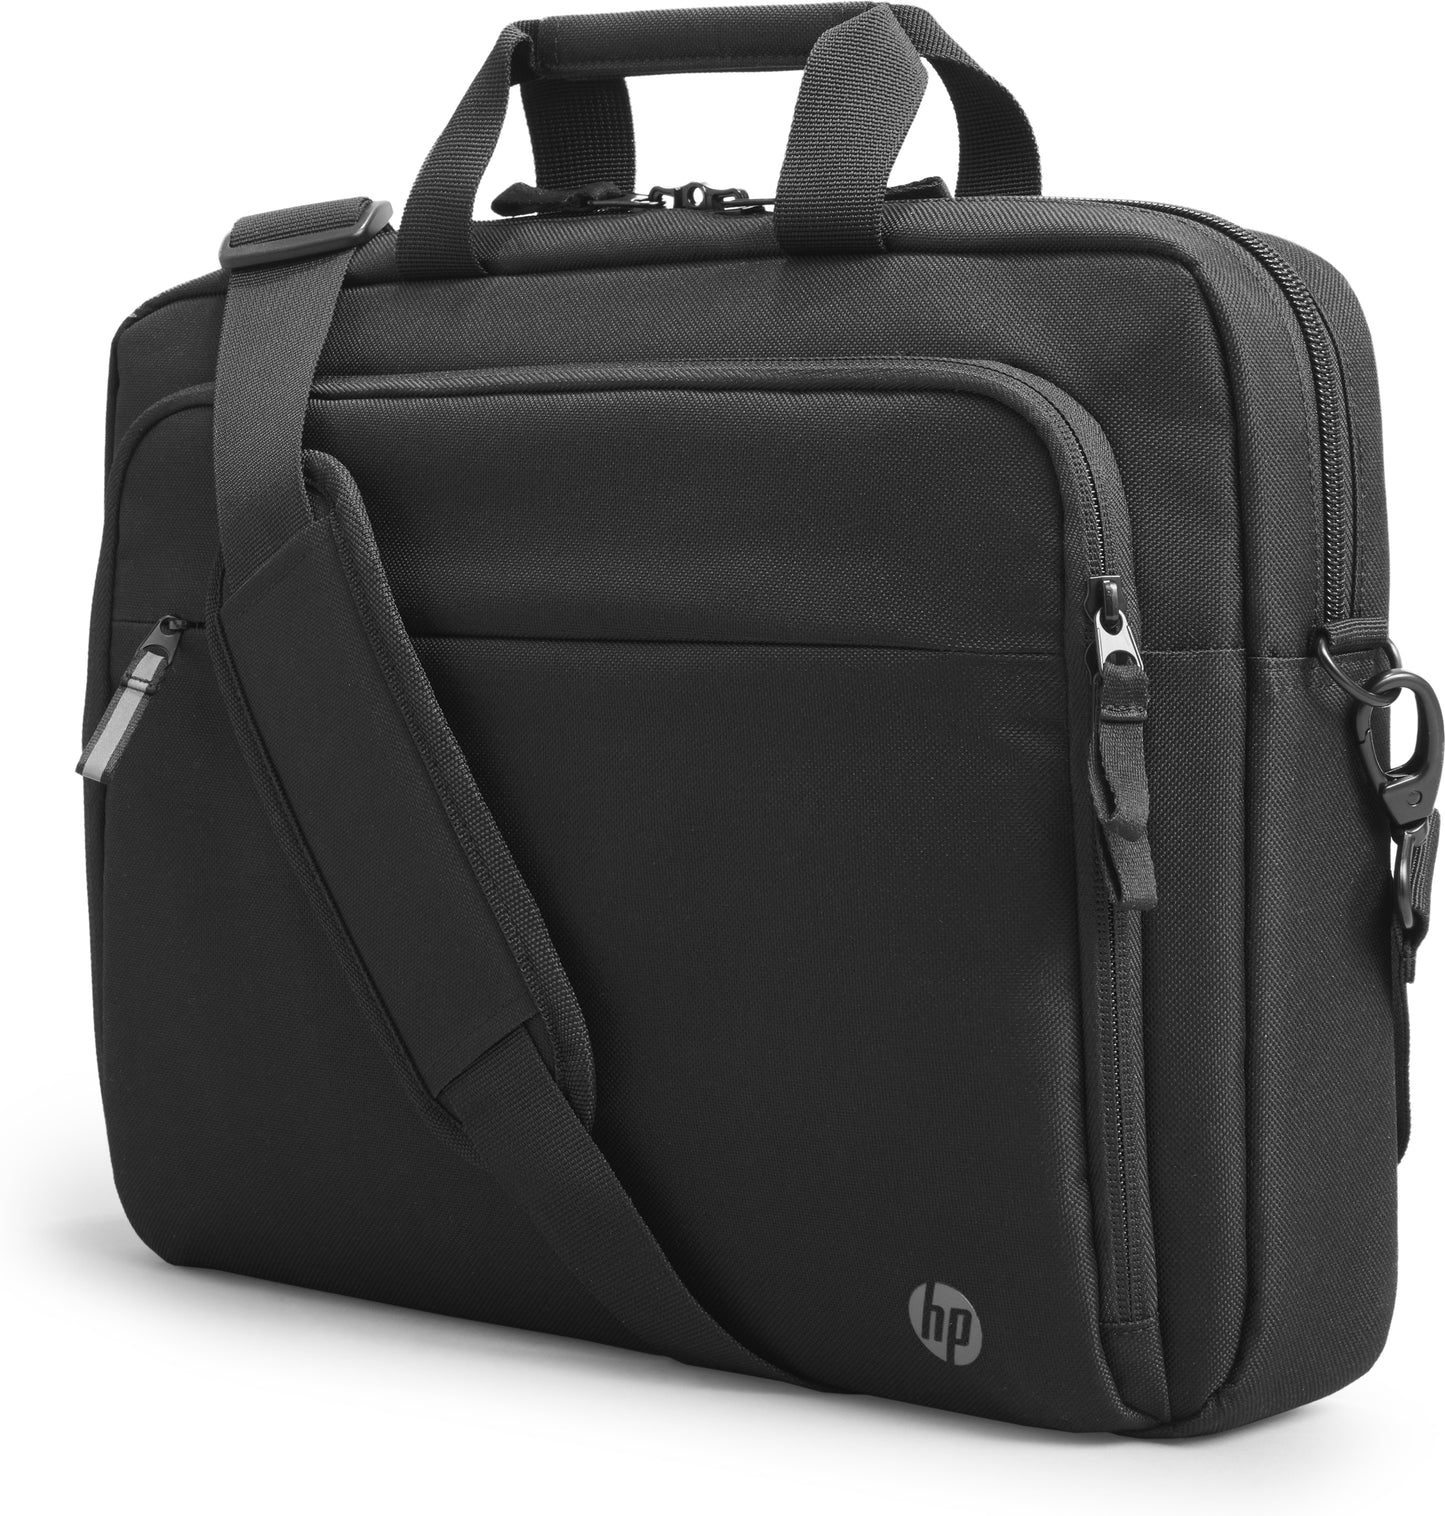 HP Renew Business 15.6-inch Laptop Bag-1